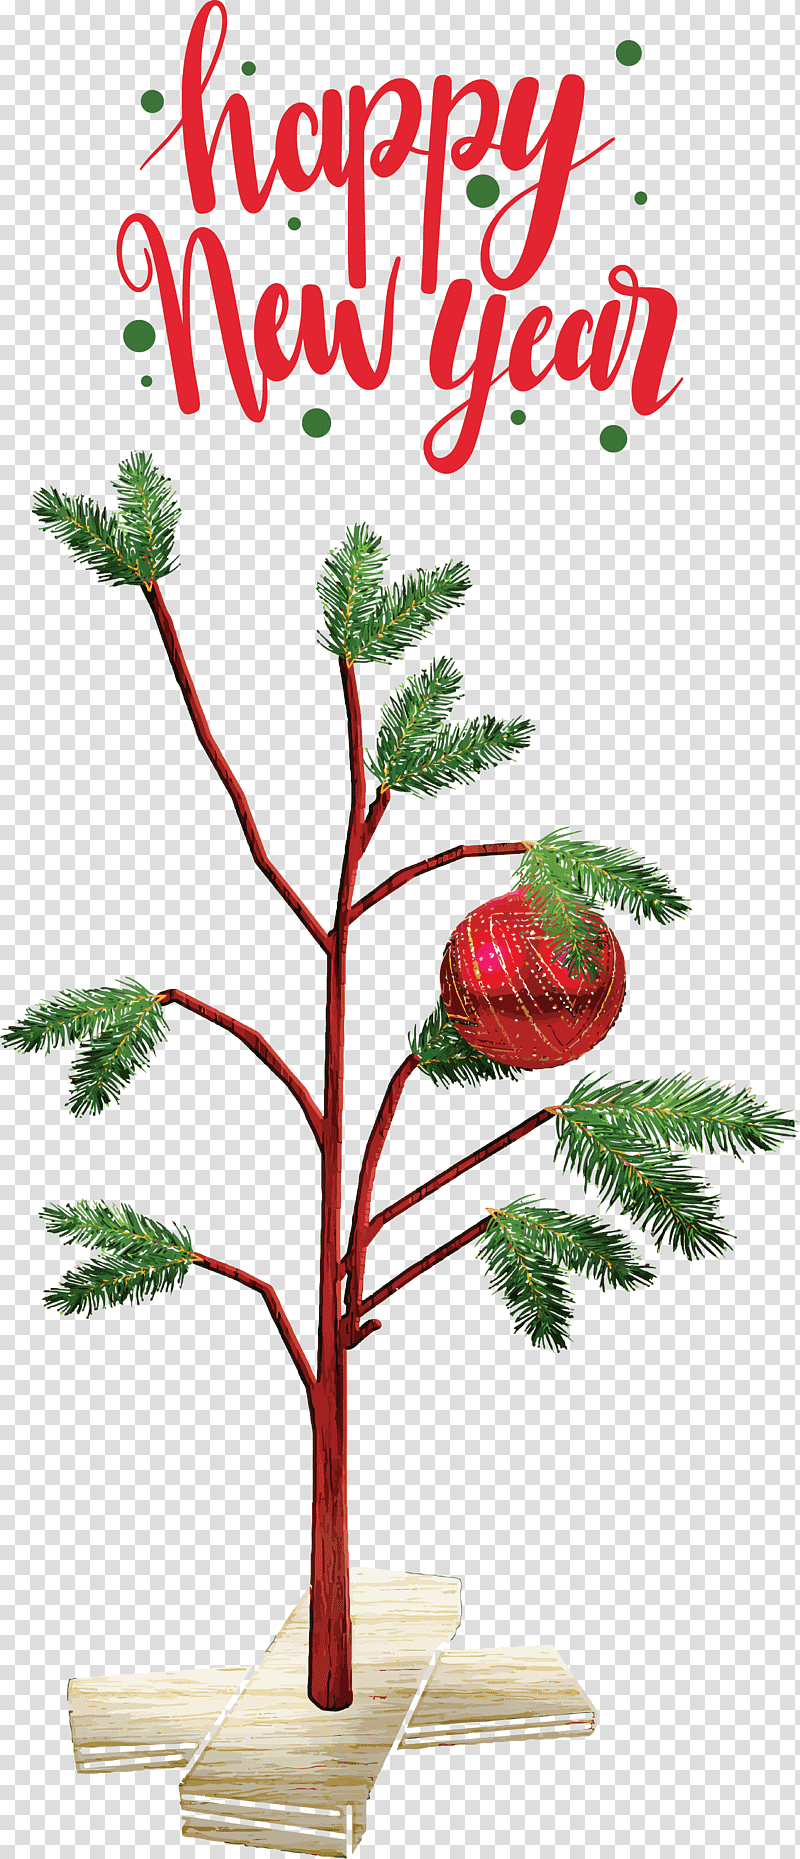 2021 Happy New Year 2021 New Year Happy New Year, Christmas Tree, Christmas Day, Santa Claus, Cartoon, Christmas Tree Ribbon, Holiday transparent background PNG clipart